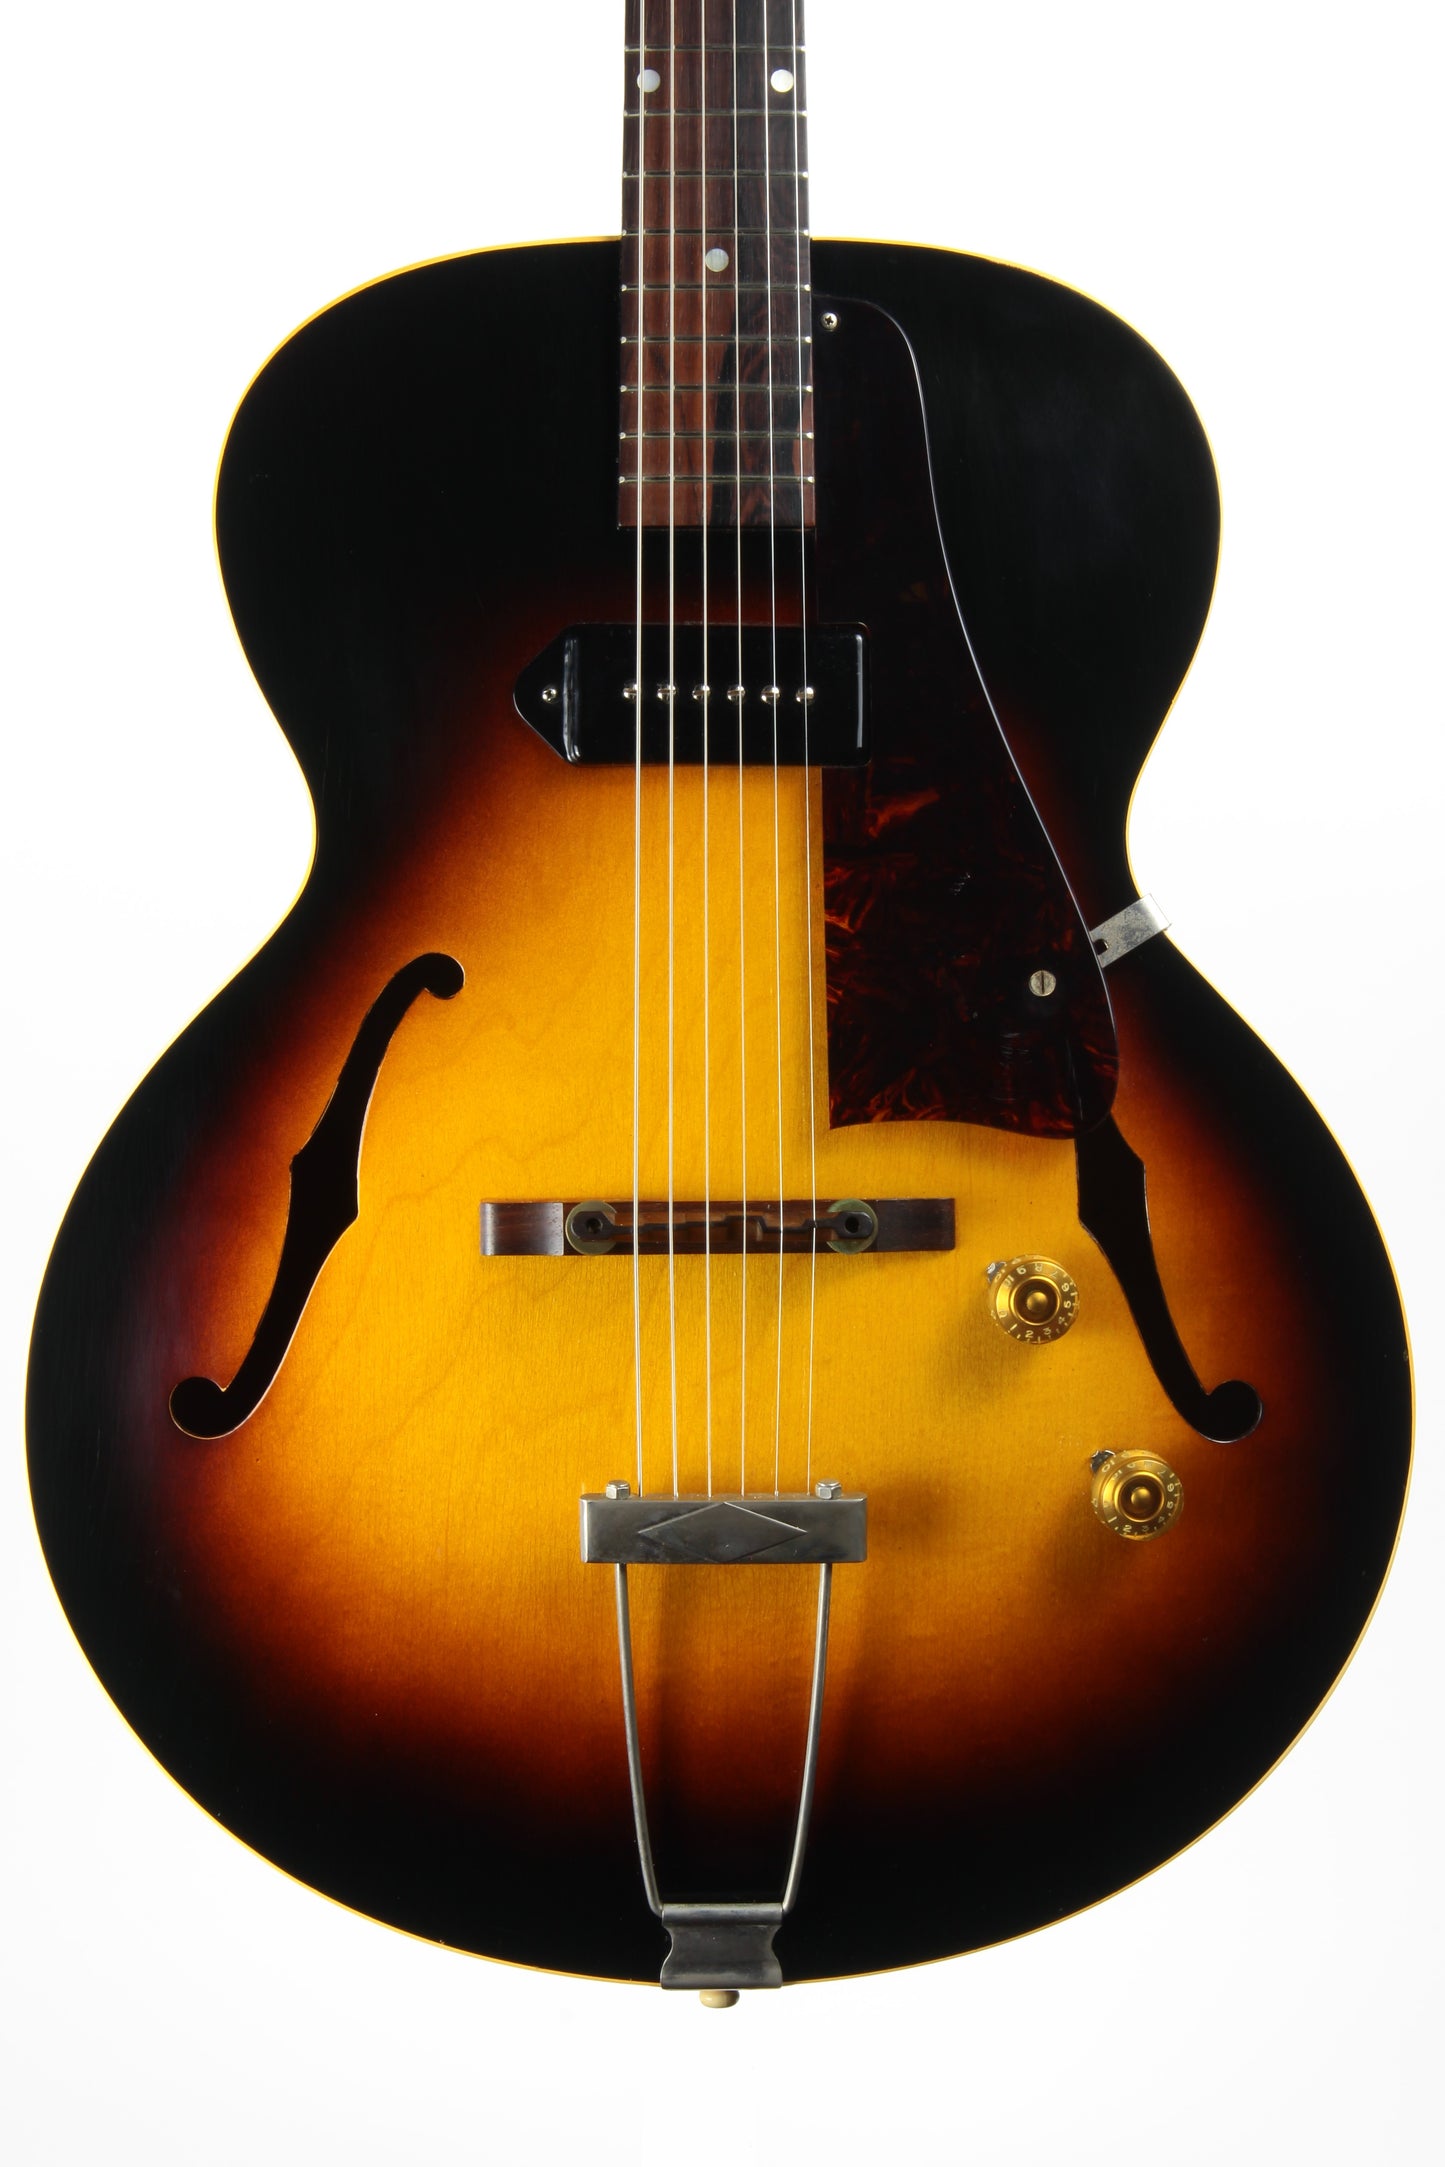 1954 Gibson ES-125 Full-Body Vintage Archtop w/ Original Lifton Hardshell Case - Sunburst, P90 Pickup